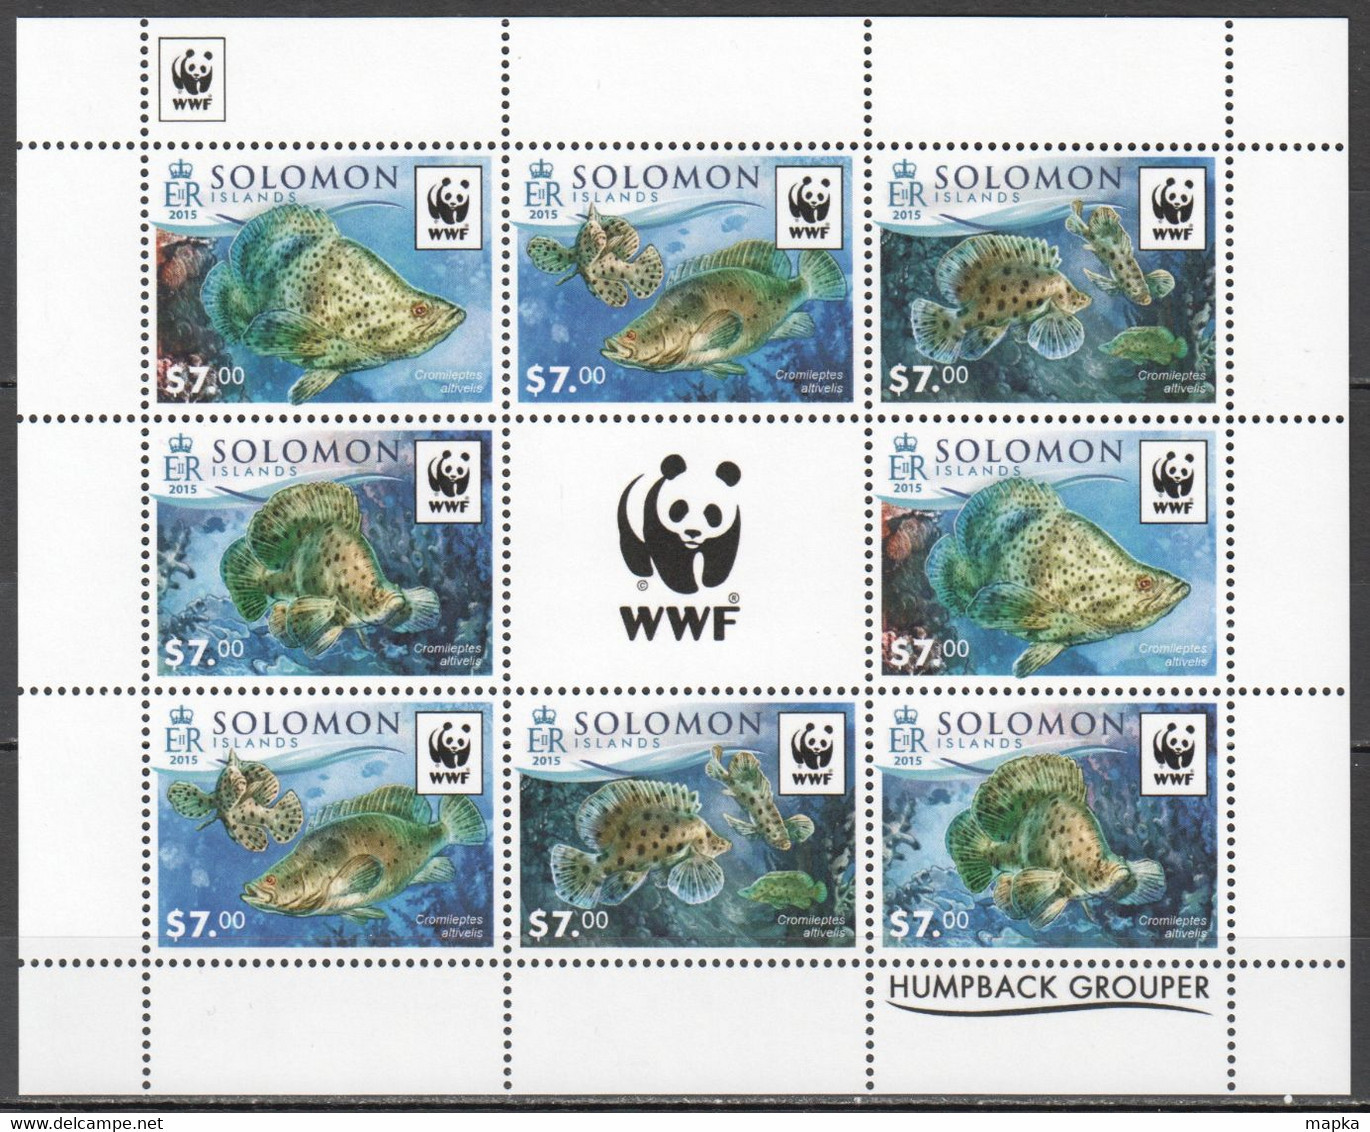 LS837 2015 SOLOMON ISLANDS WWF MARINE LIFE HUMPBACK GROUPER MICHEL #3416-19 1KB MNH - Ongebruikt